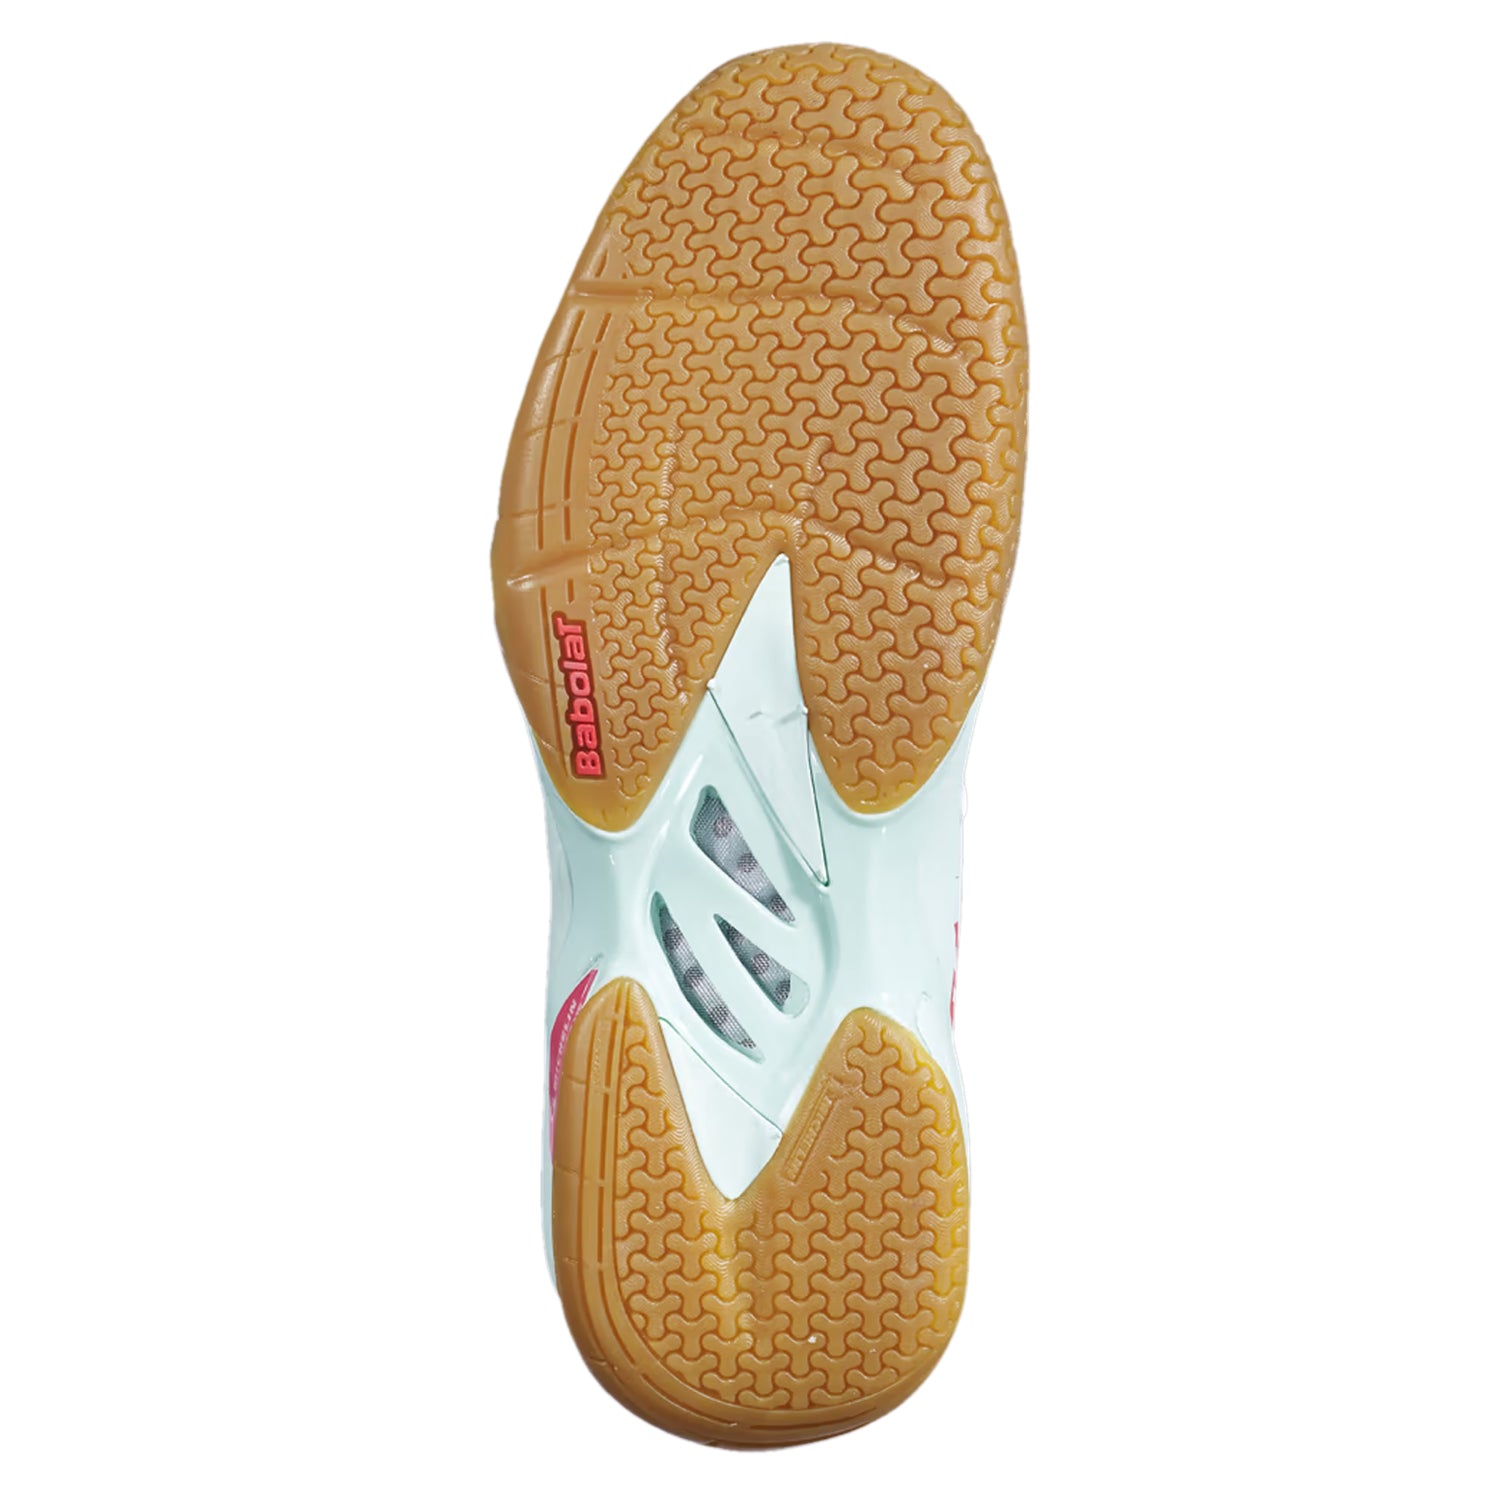 Babolat Shadow Spirit Women Badminton Shoe, White/Light Blue - Best Price online Prokicksports.com